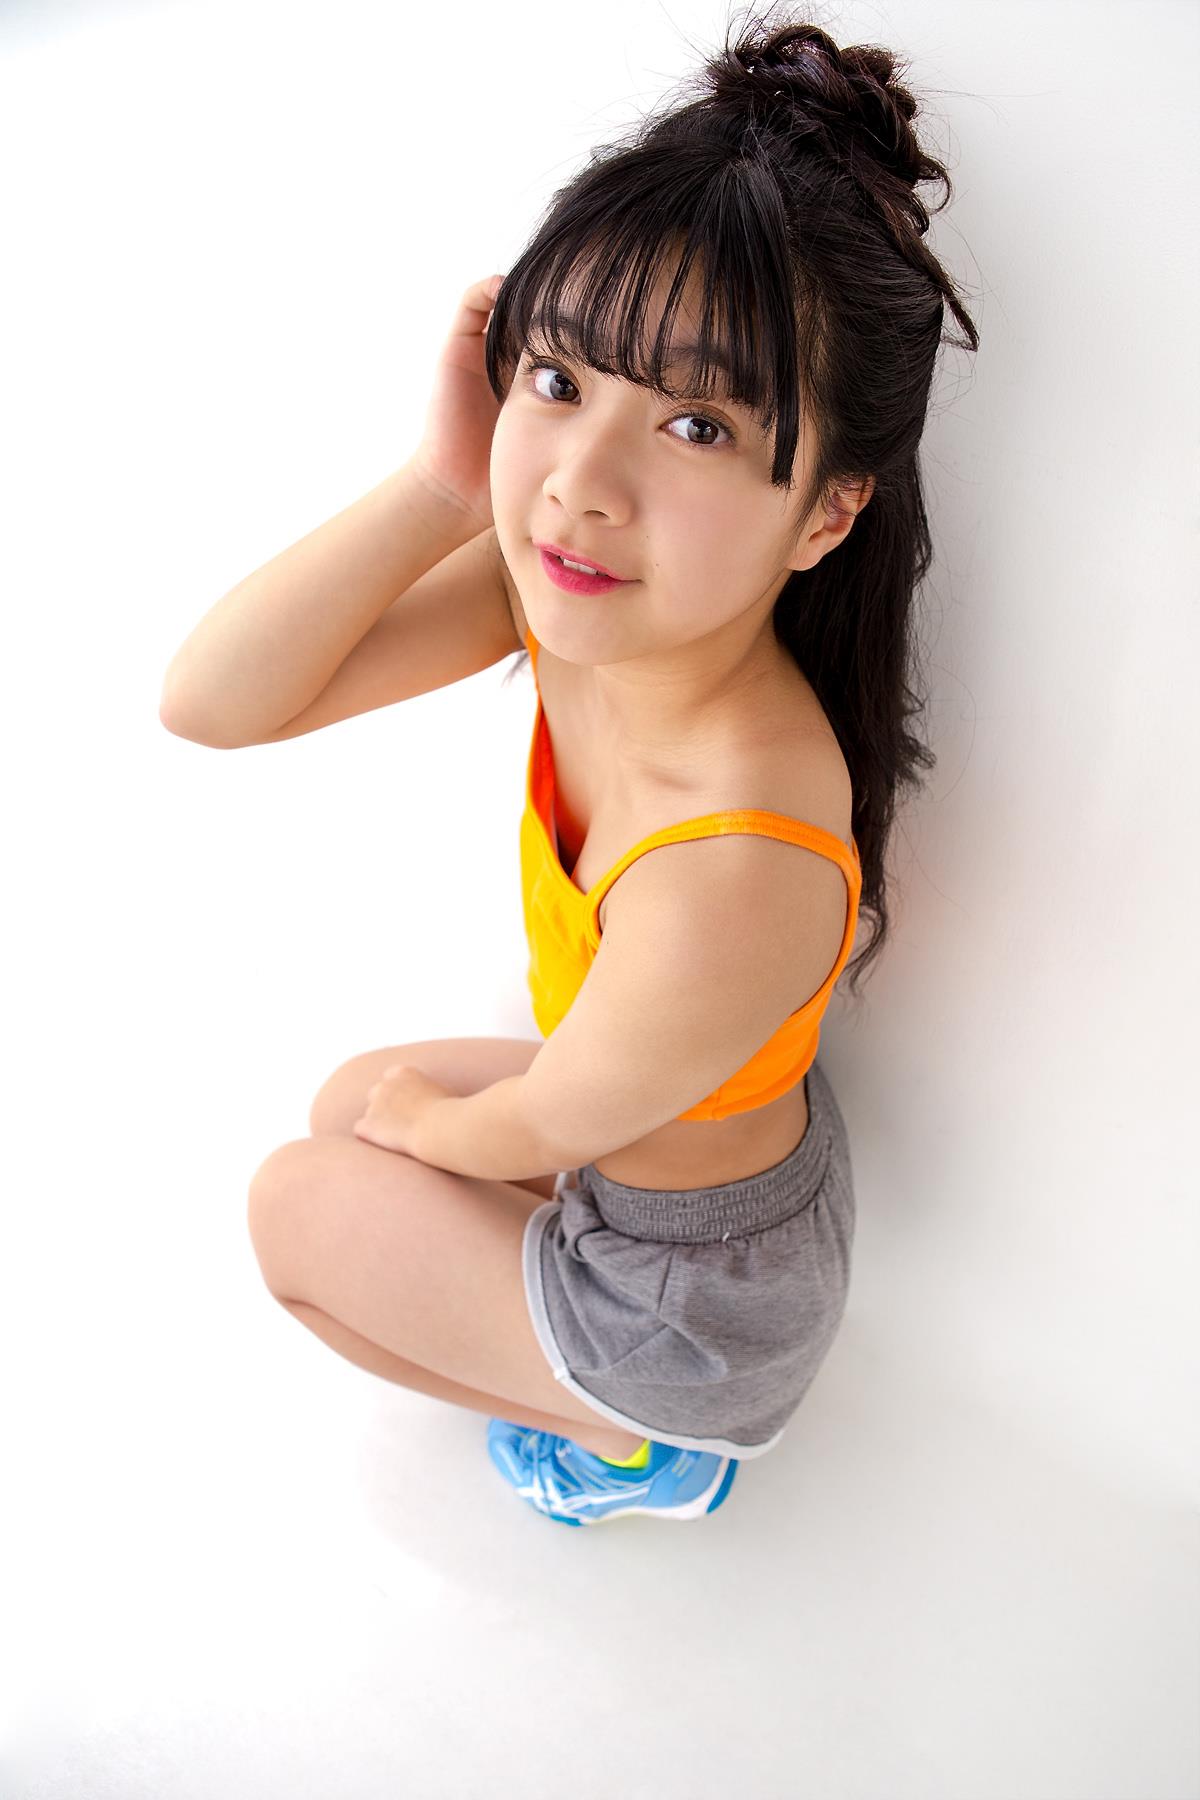 Minisuka.tv Saria Natsume 夏目咲莉愛 Premium Gallery 02 - 31.jpg